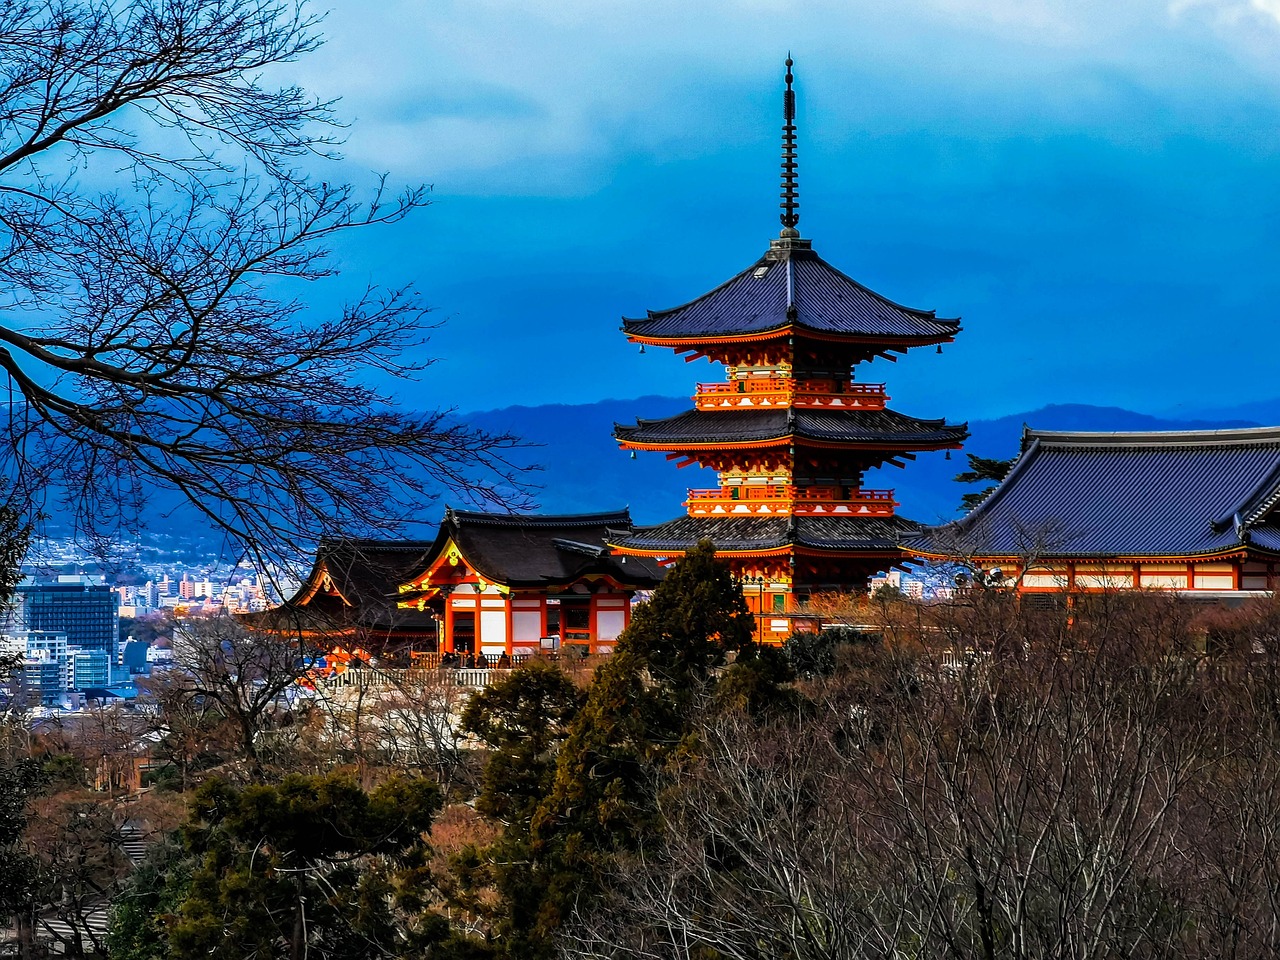 Kyoto (京都, Kyōto) served as Japan's capital